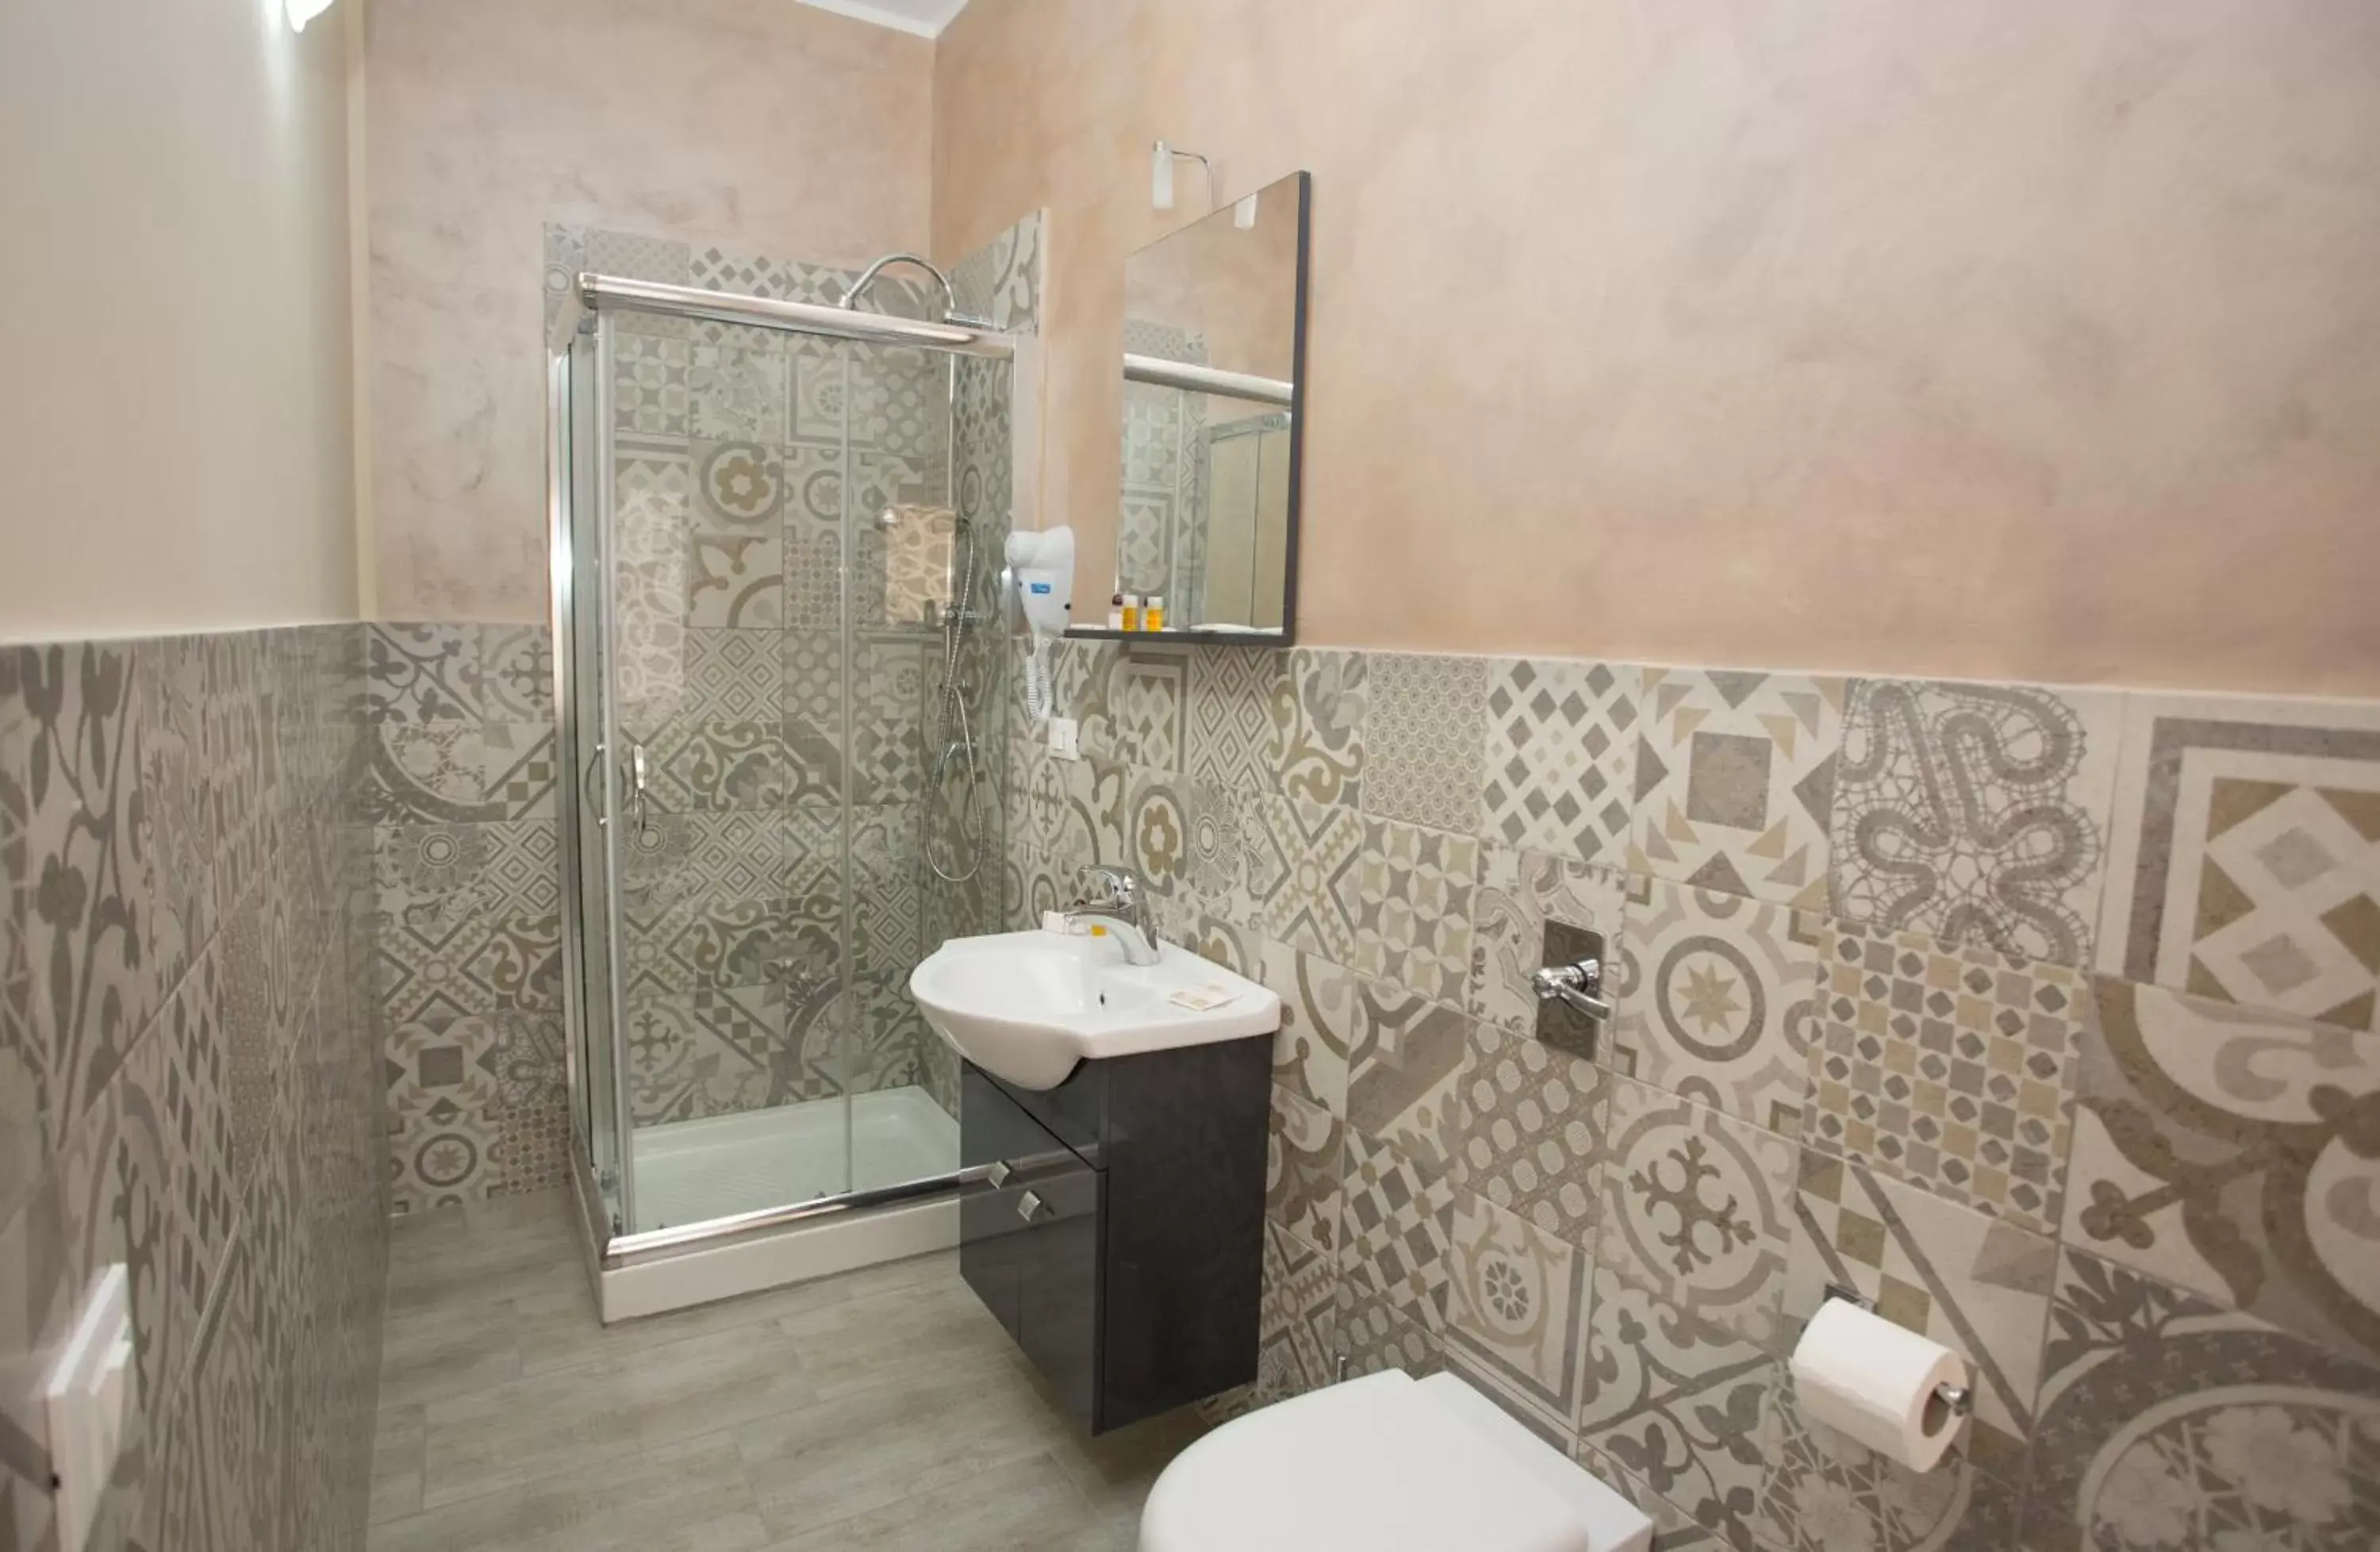 Photo of the whole room, Bathroom in B&B Palermo Sole & Cultura